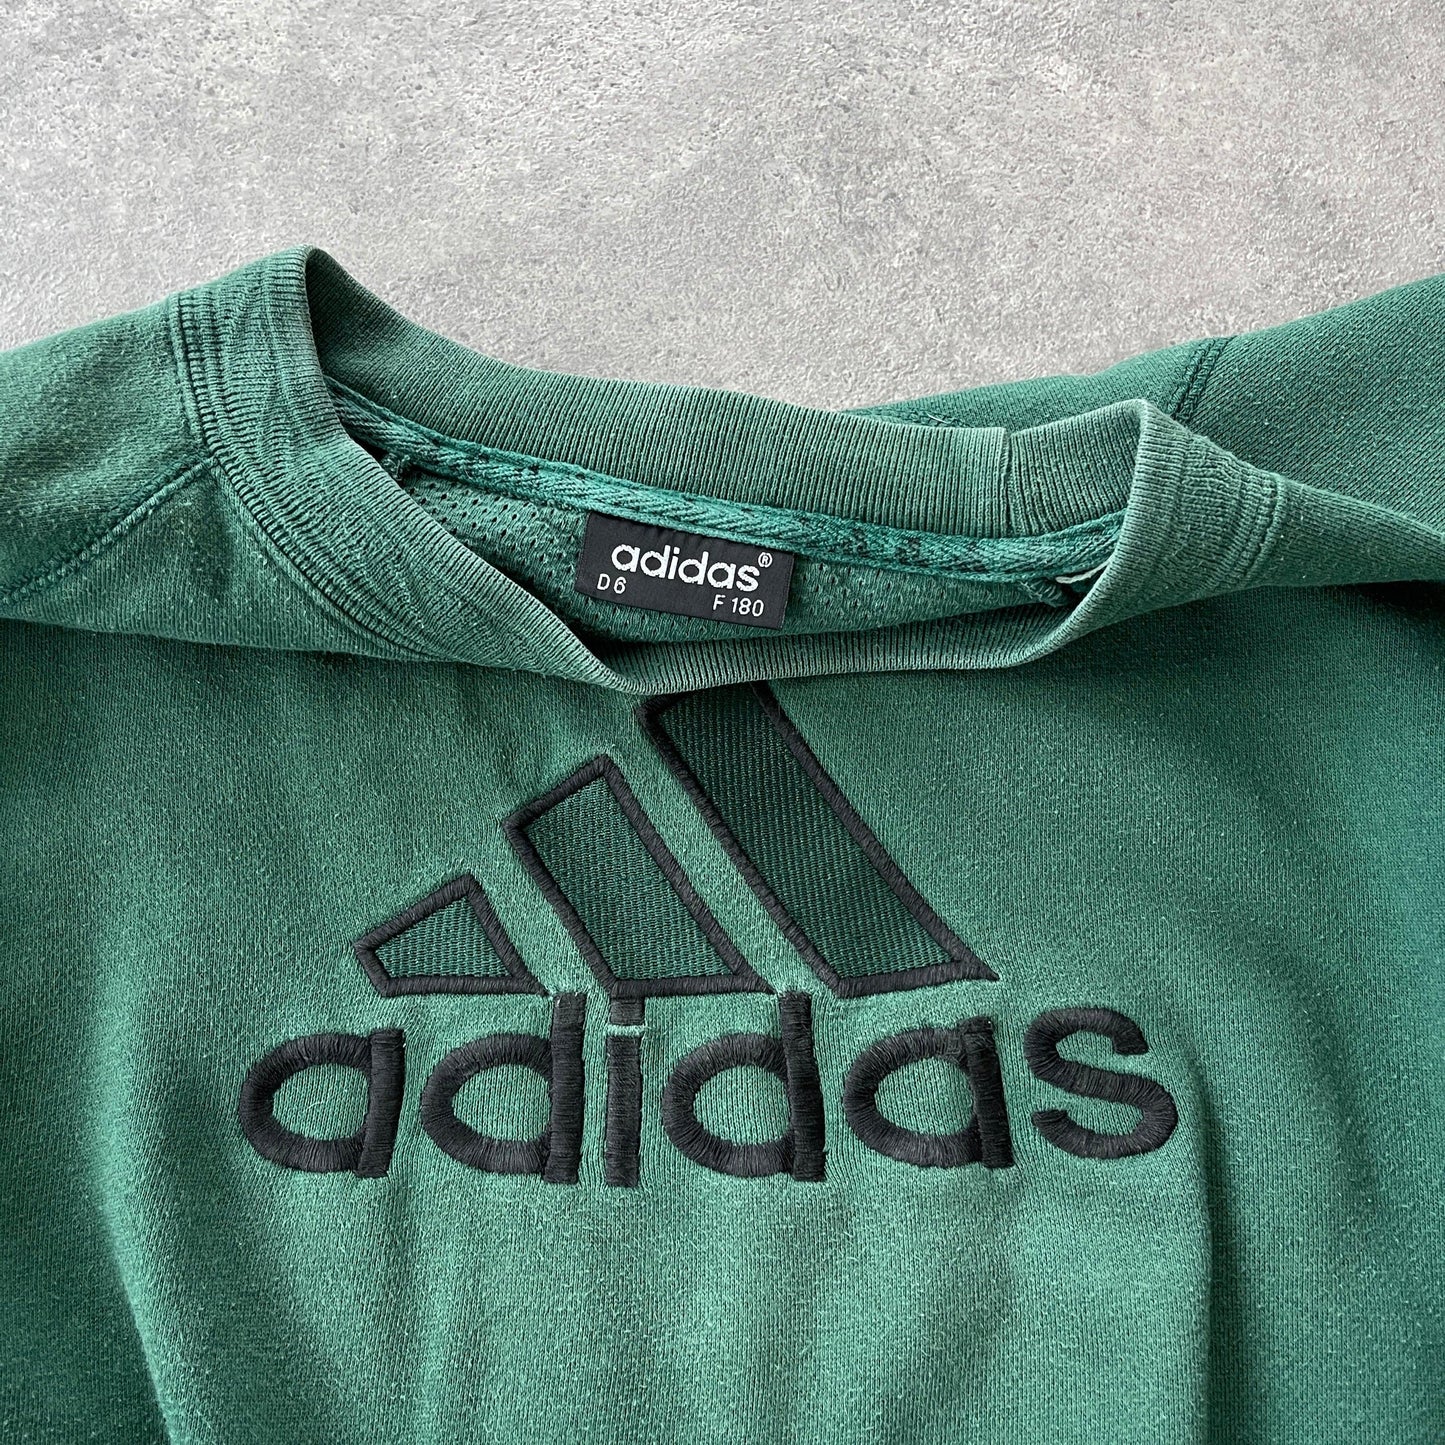 Adidas 1990s heavyweight embroidered sweatshirt (M) - Known Source